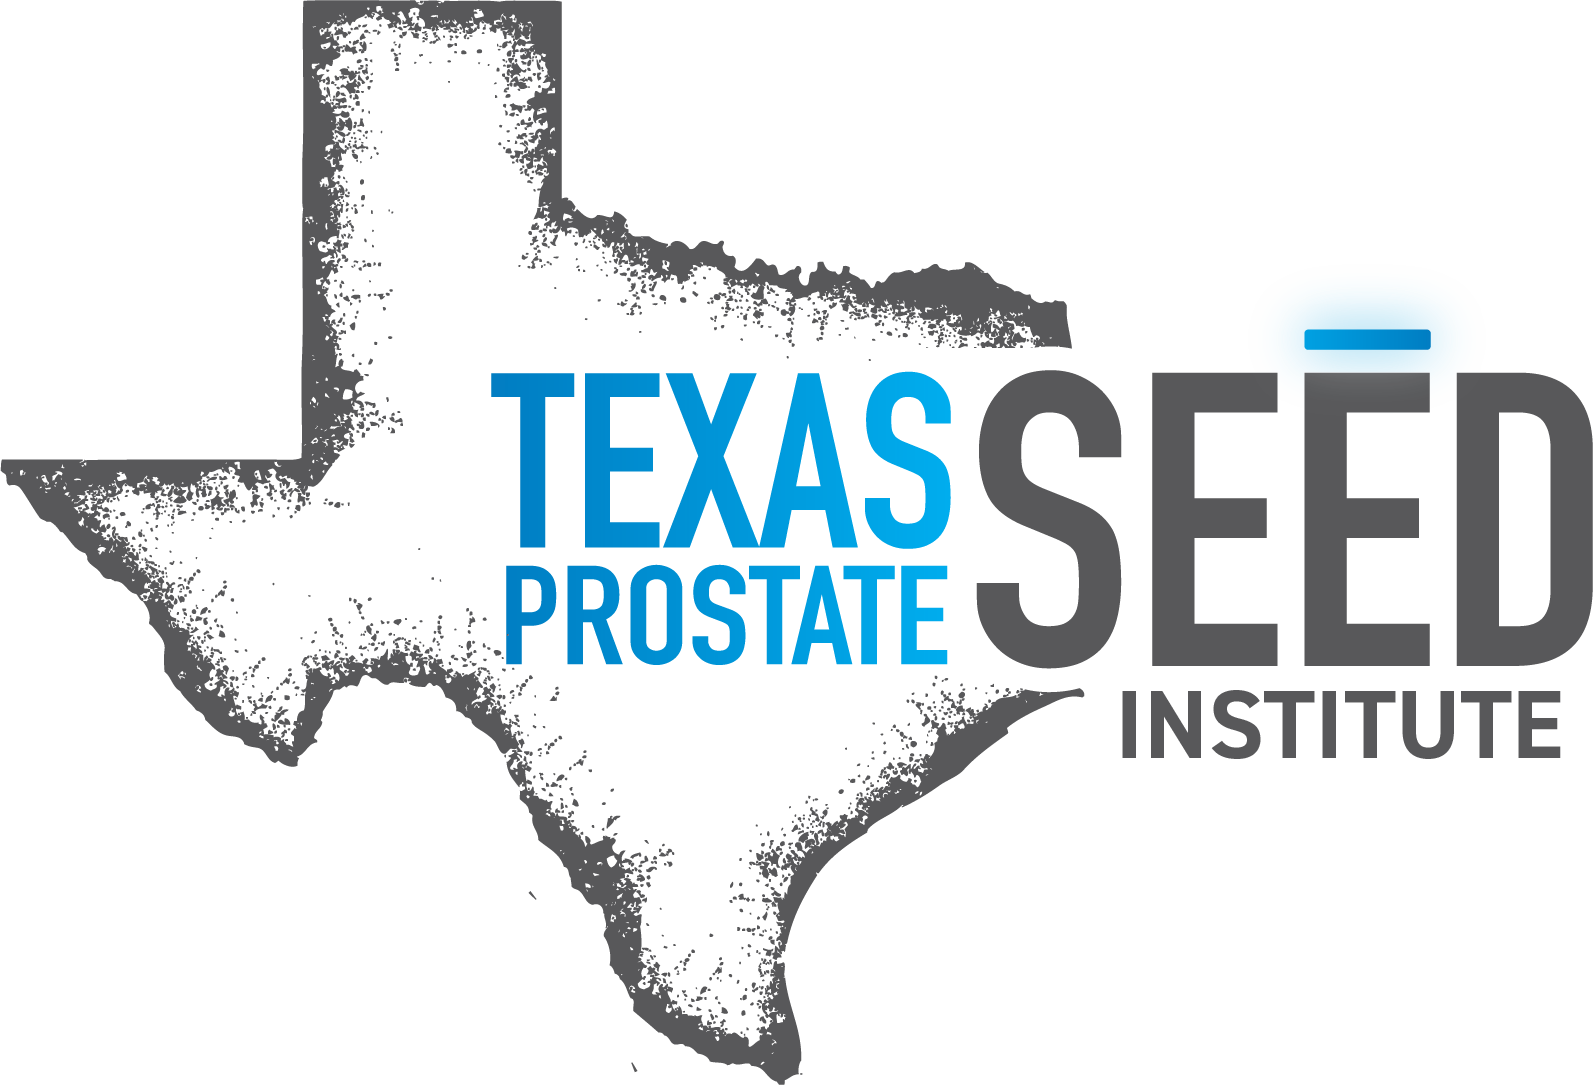 Texas Prostate Seed Institute logo